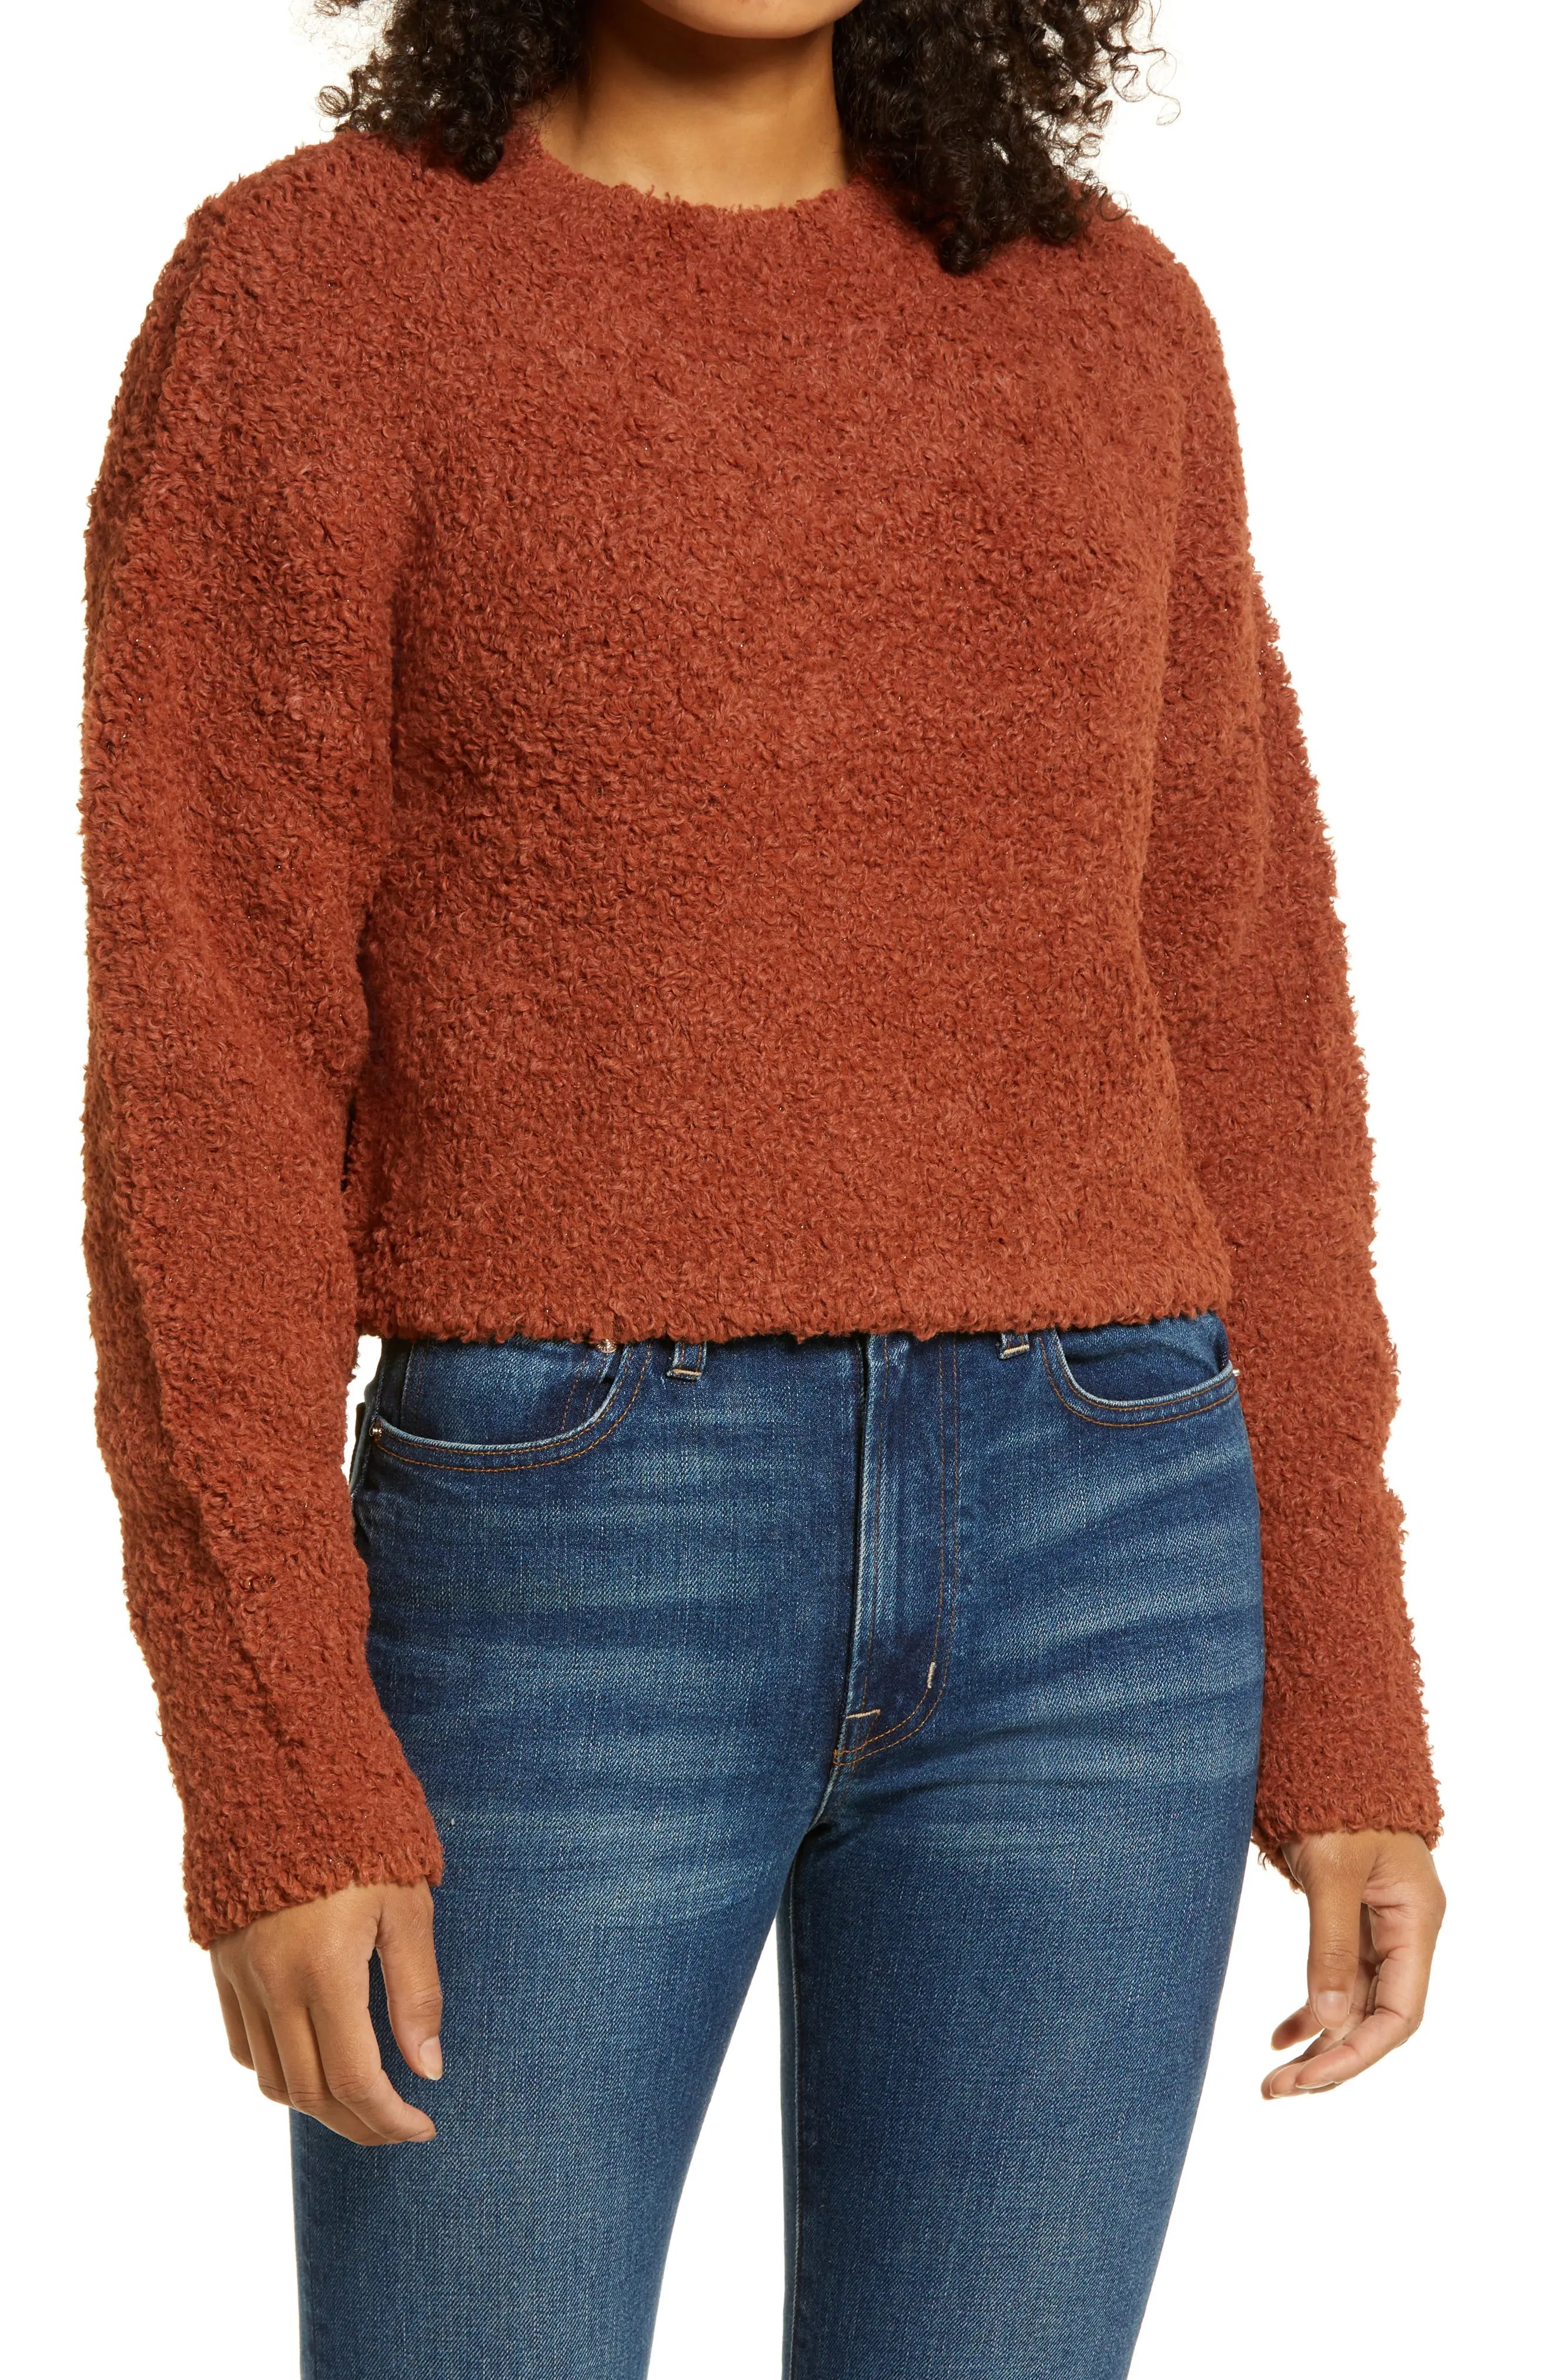 Halogen(R) Crop Boucle Sweater, Size Medium in Rust Sequoia at Nordstrom | Nordstrom